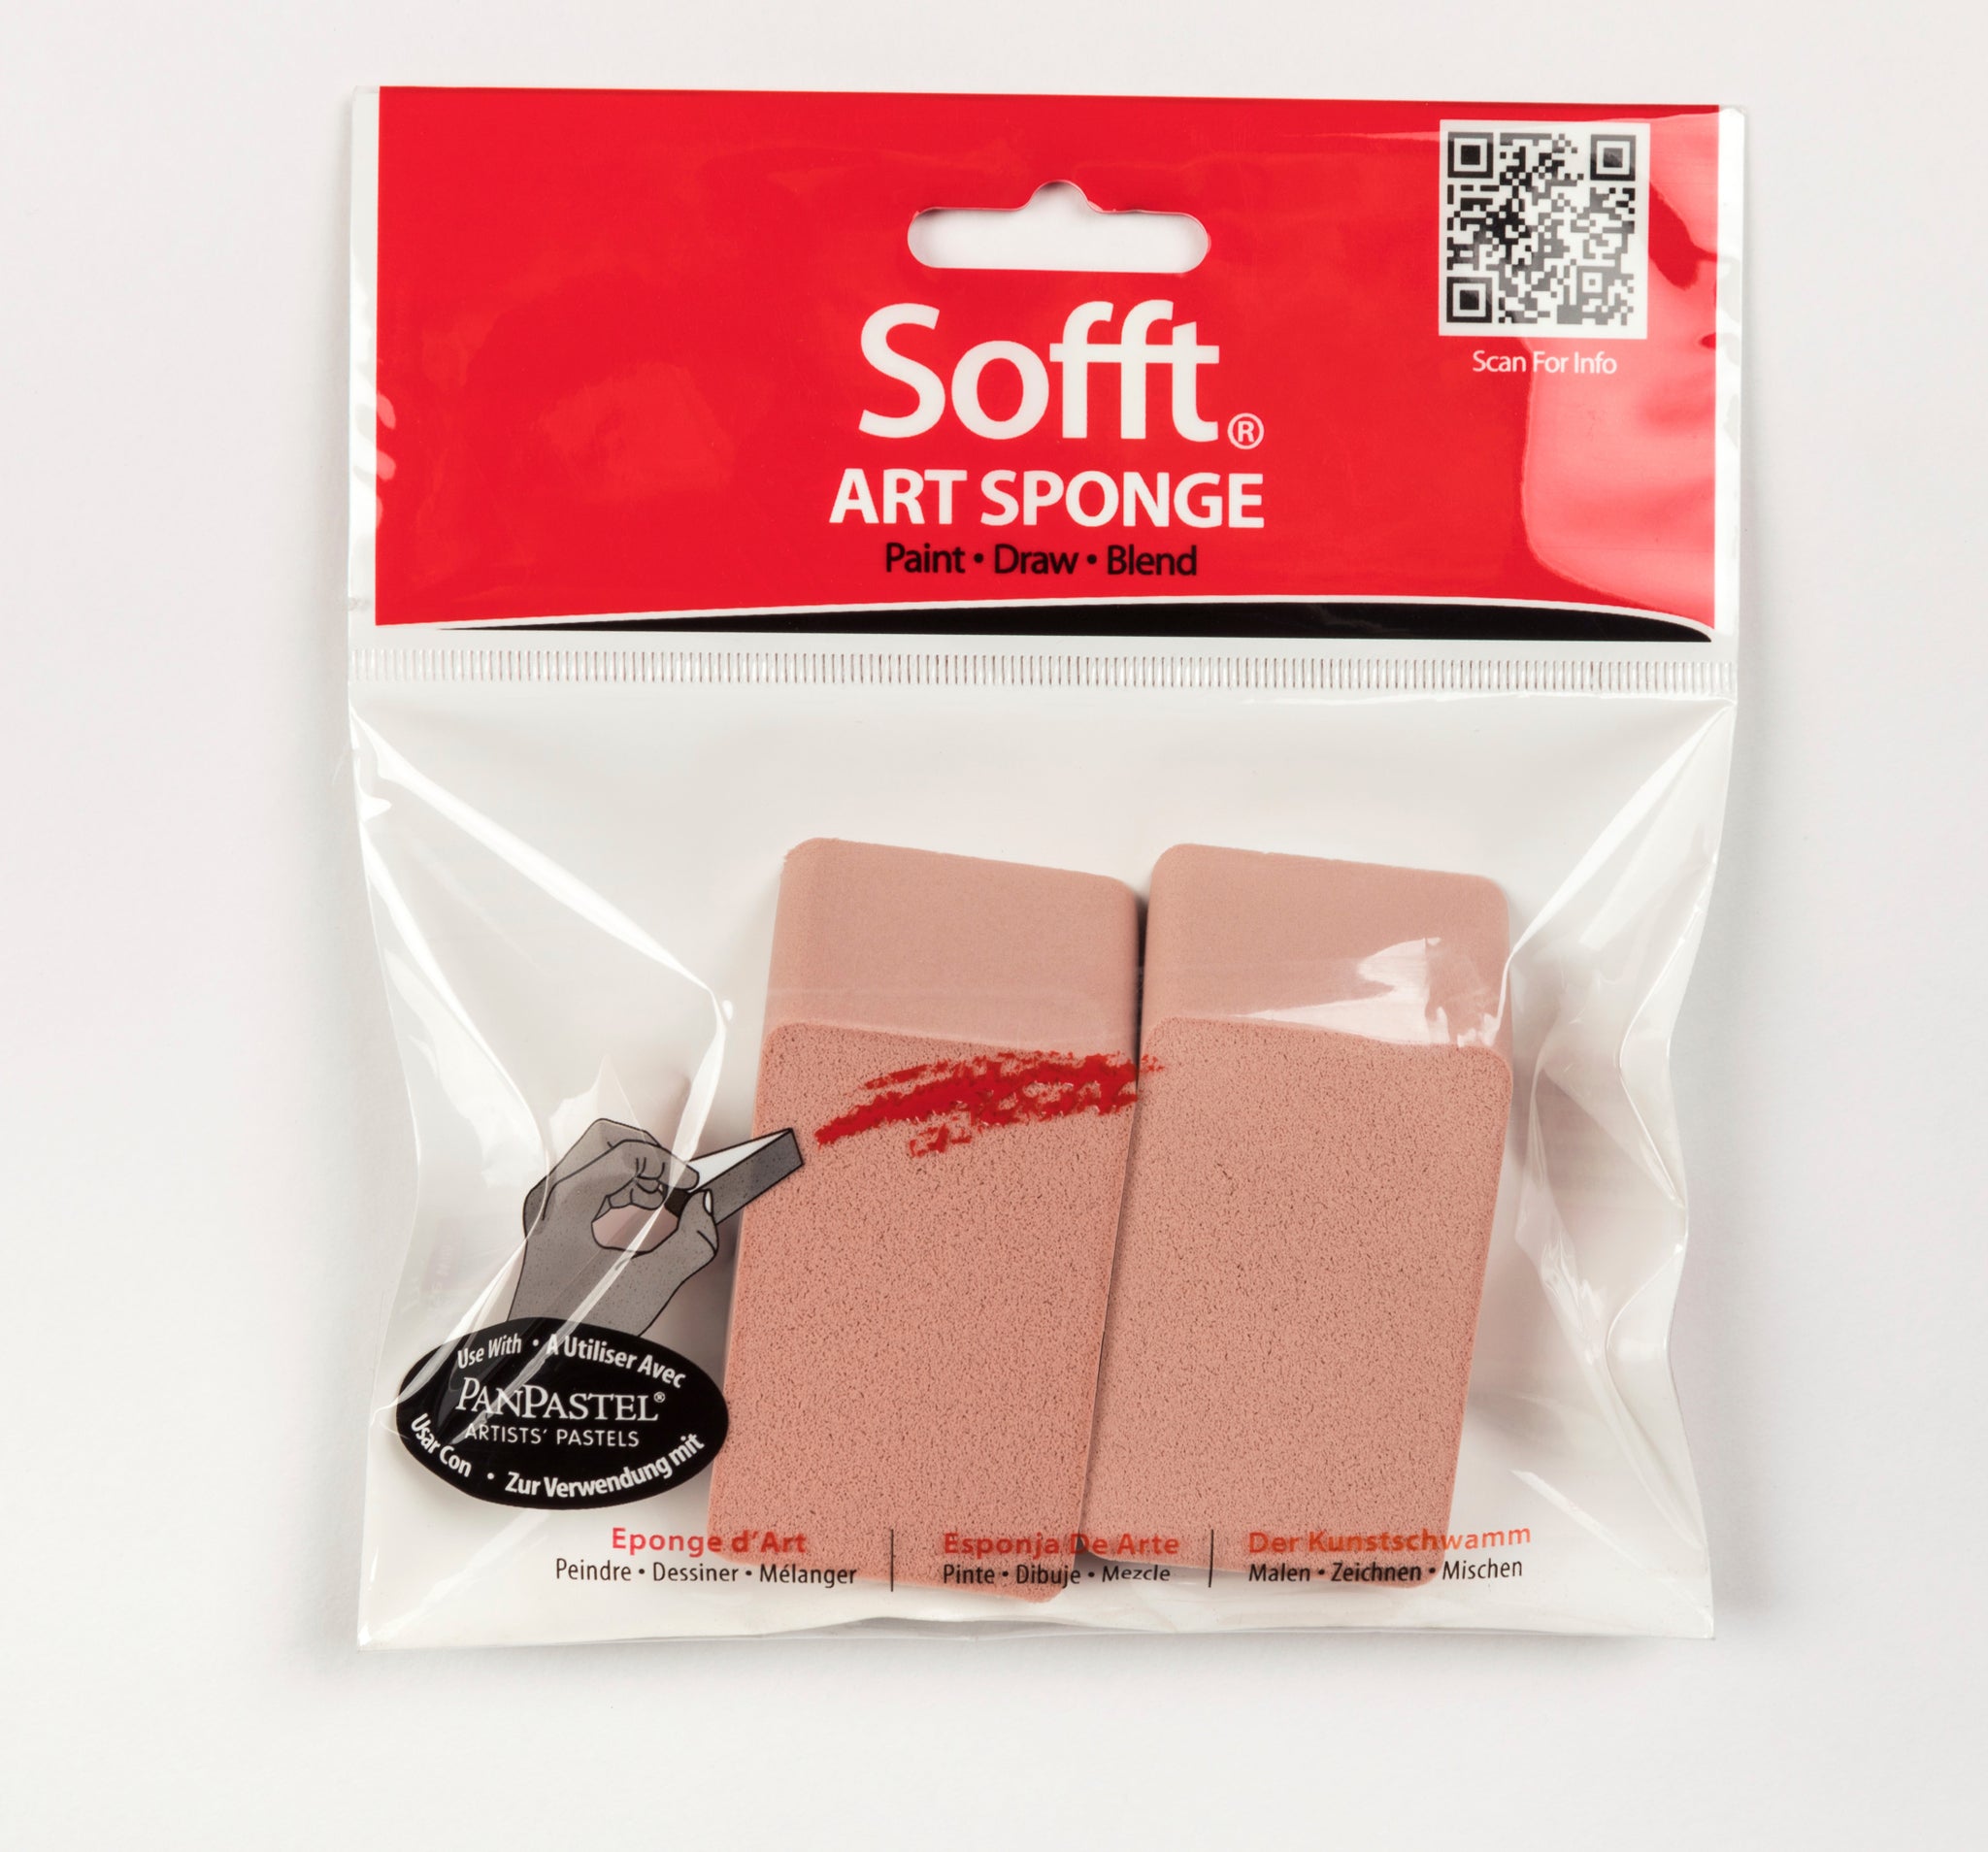 PanPastel Sofft tools Angle Slice - Flat Sponge 61031 pack of 2